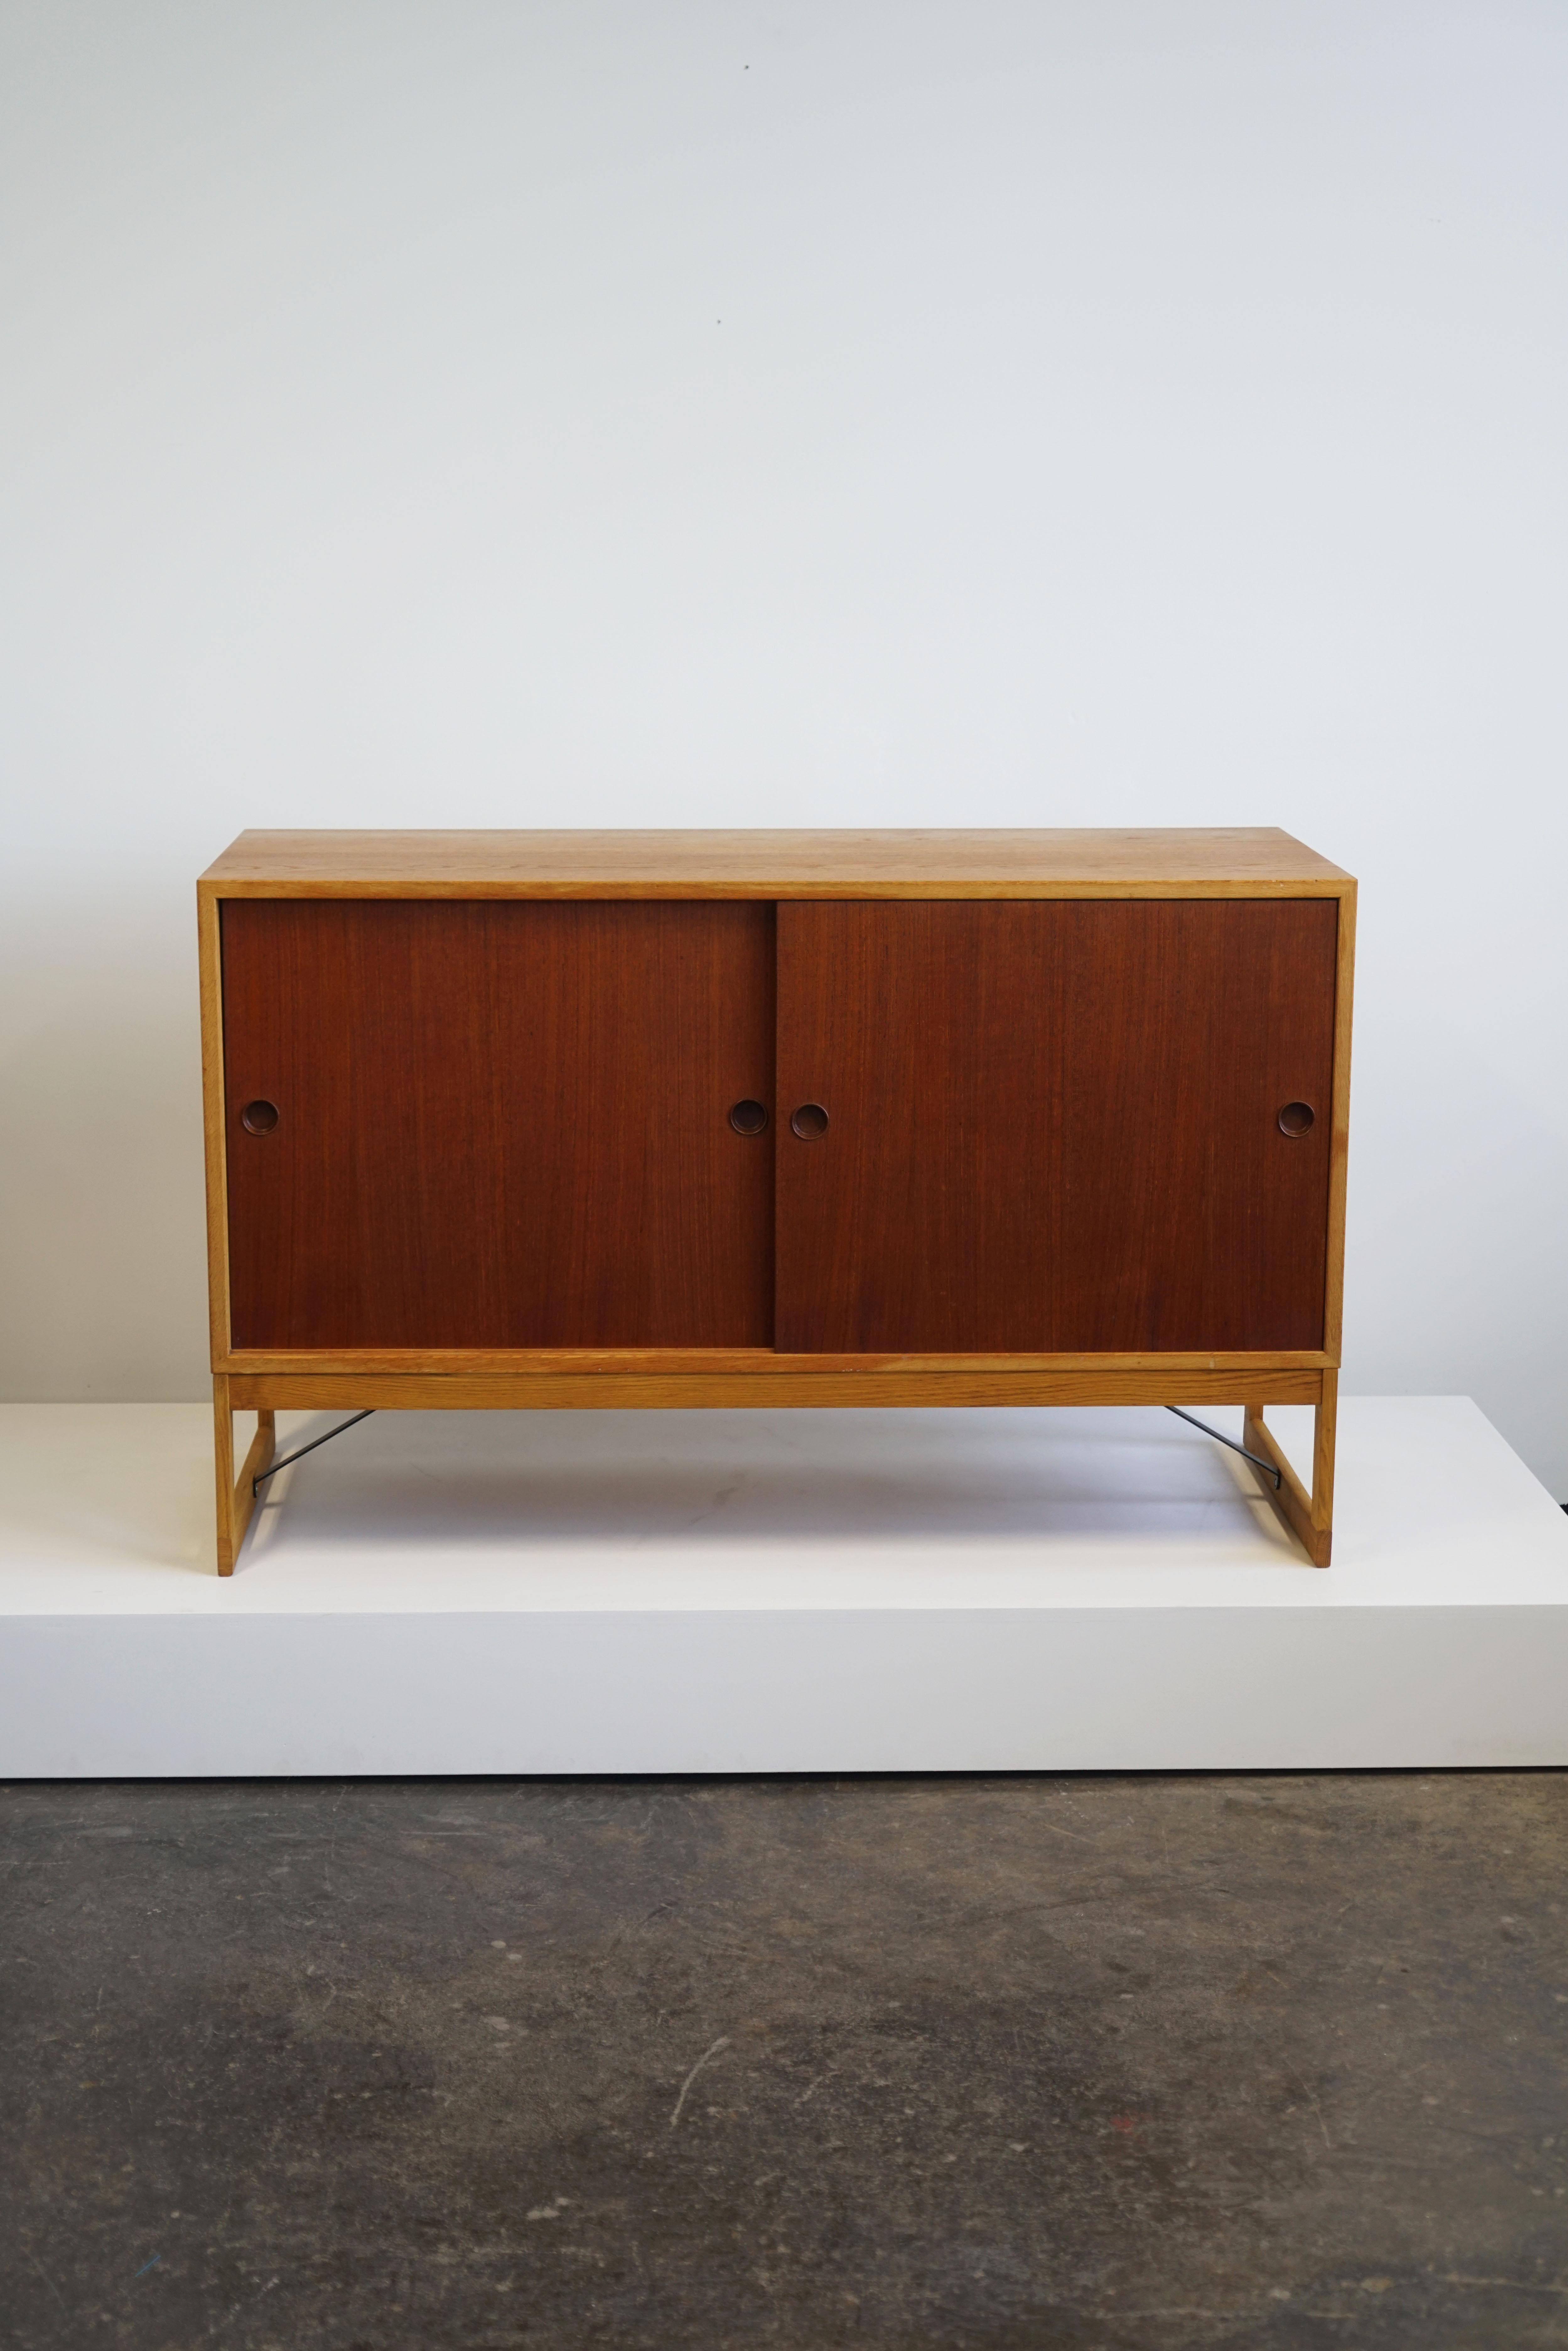 Borge Mogensen chest of drawers.
Oak and Teak.
Measures: 33